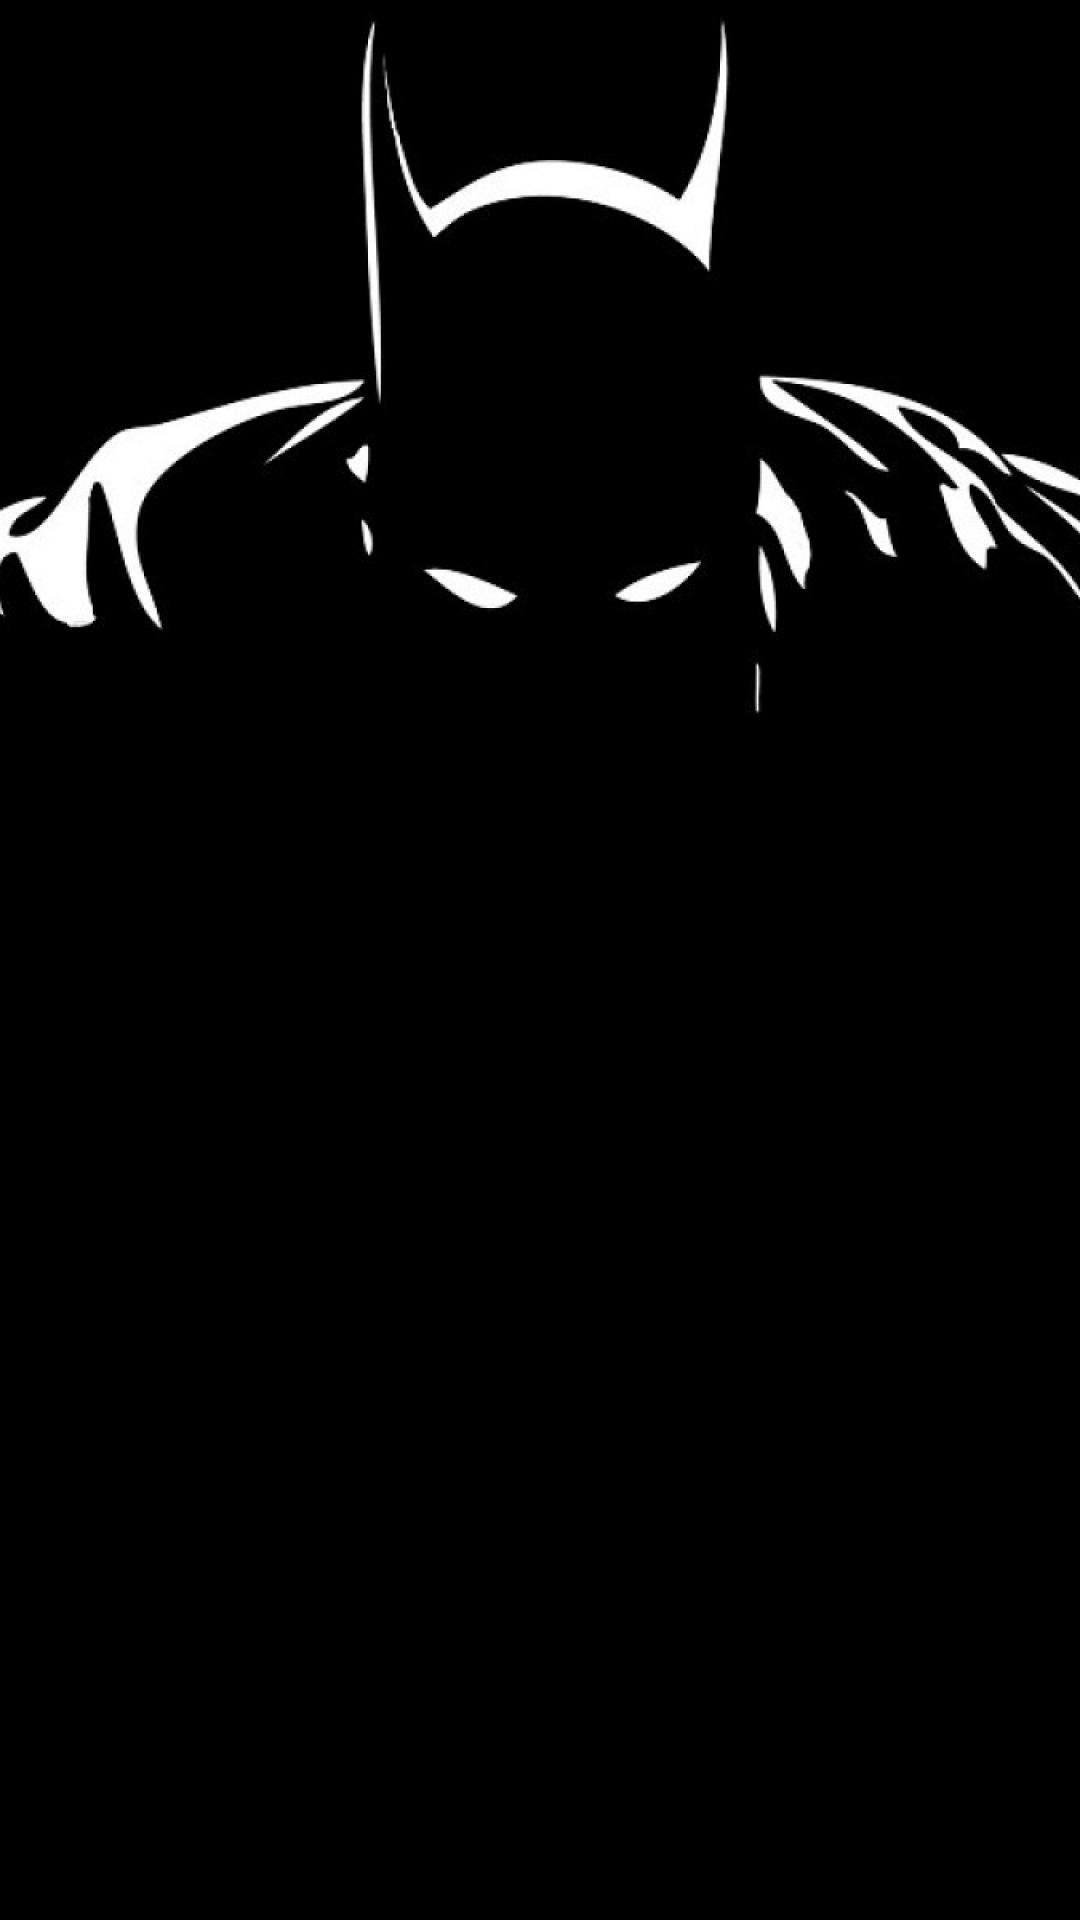 1080x1920 Batman black and white black iphone 6 plus wallpaper.